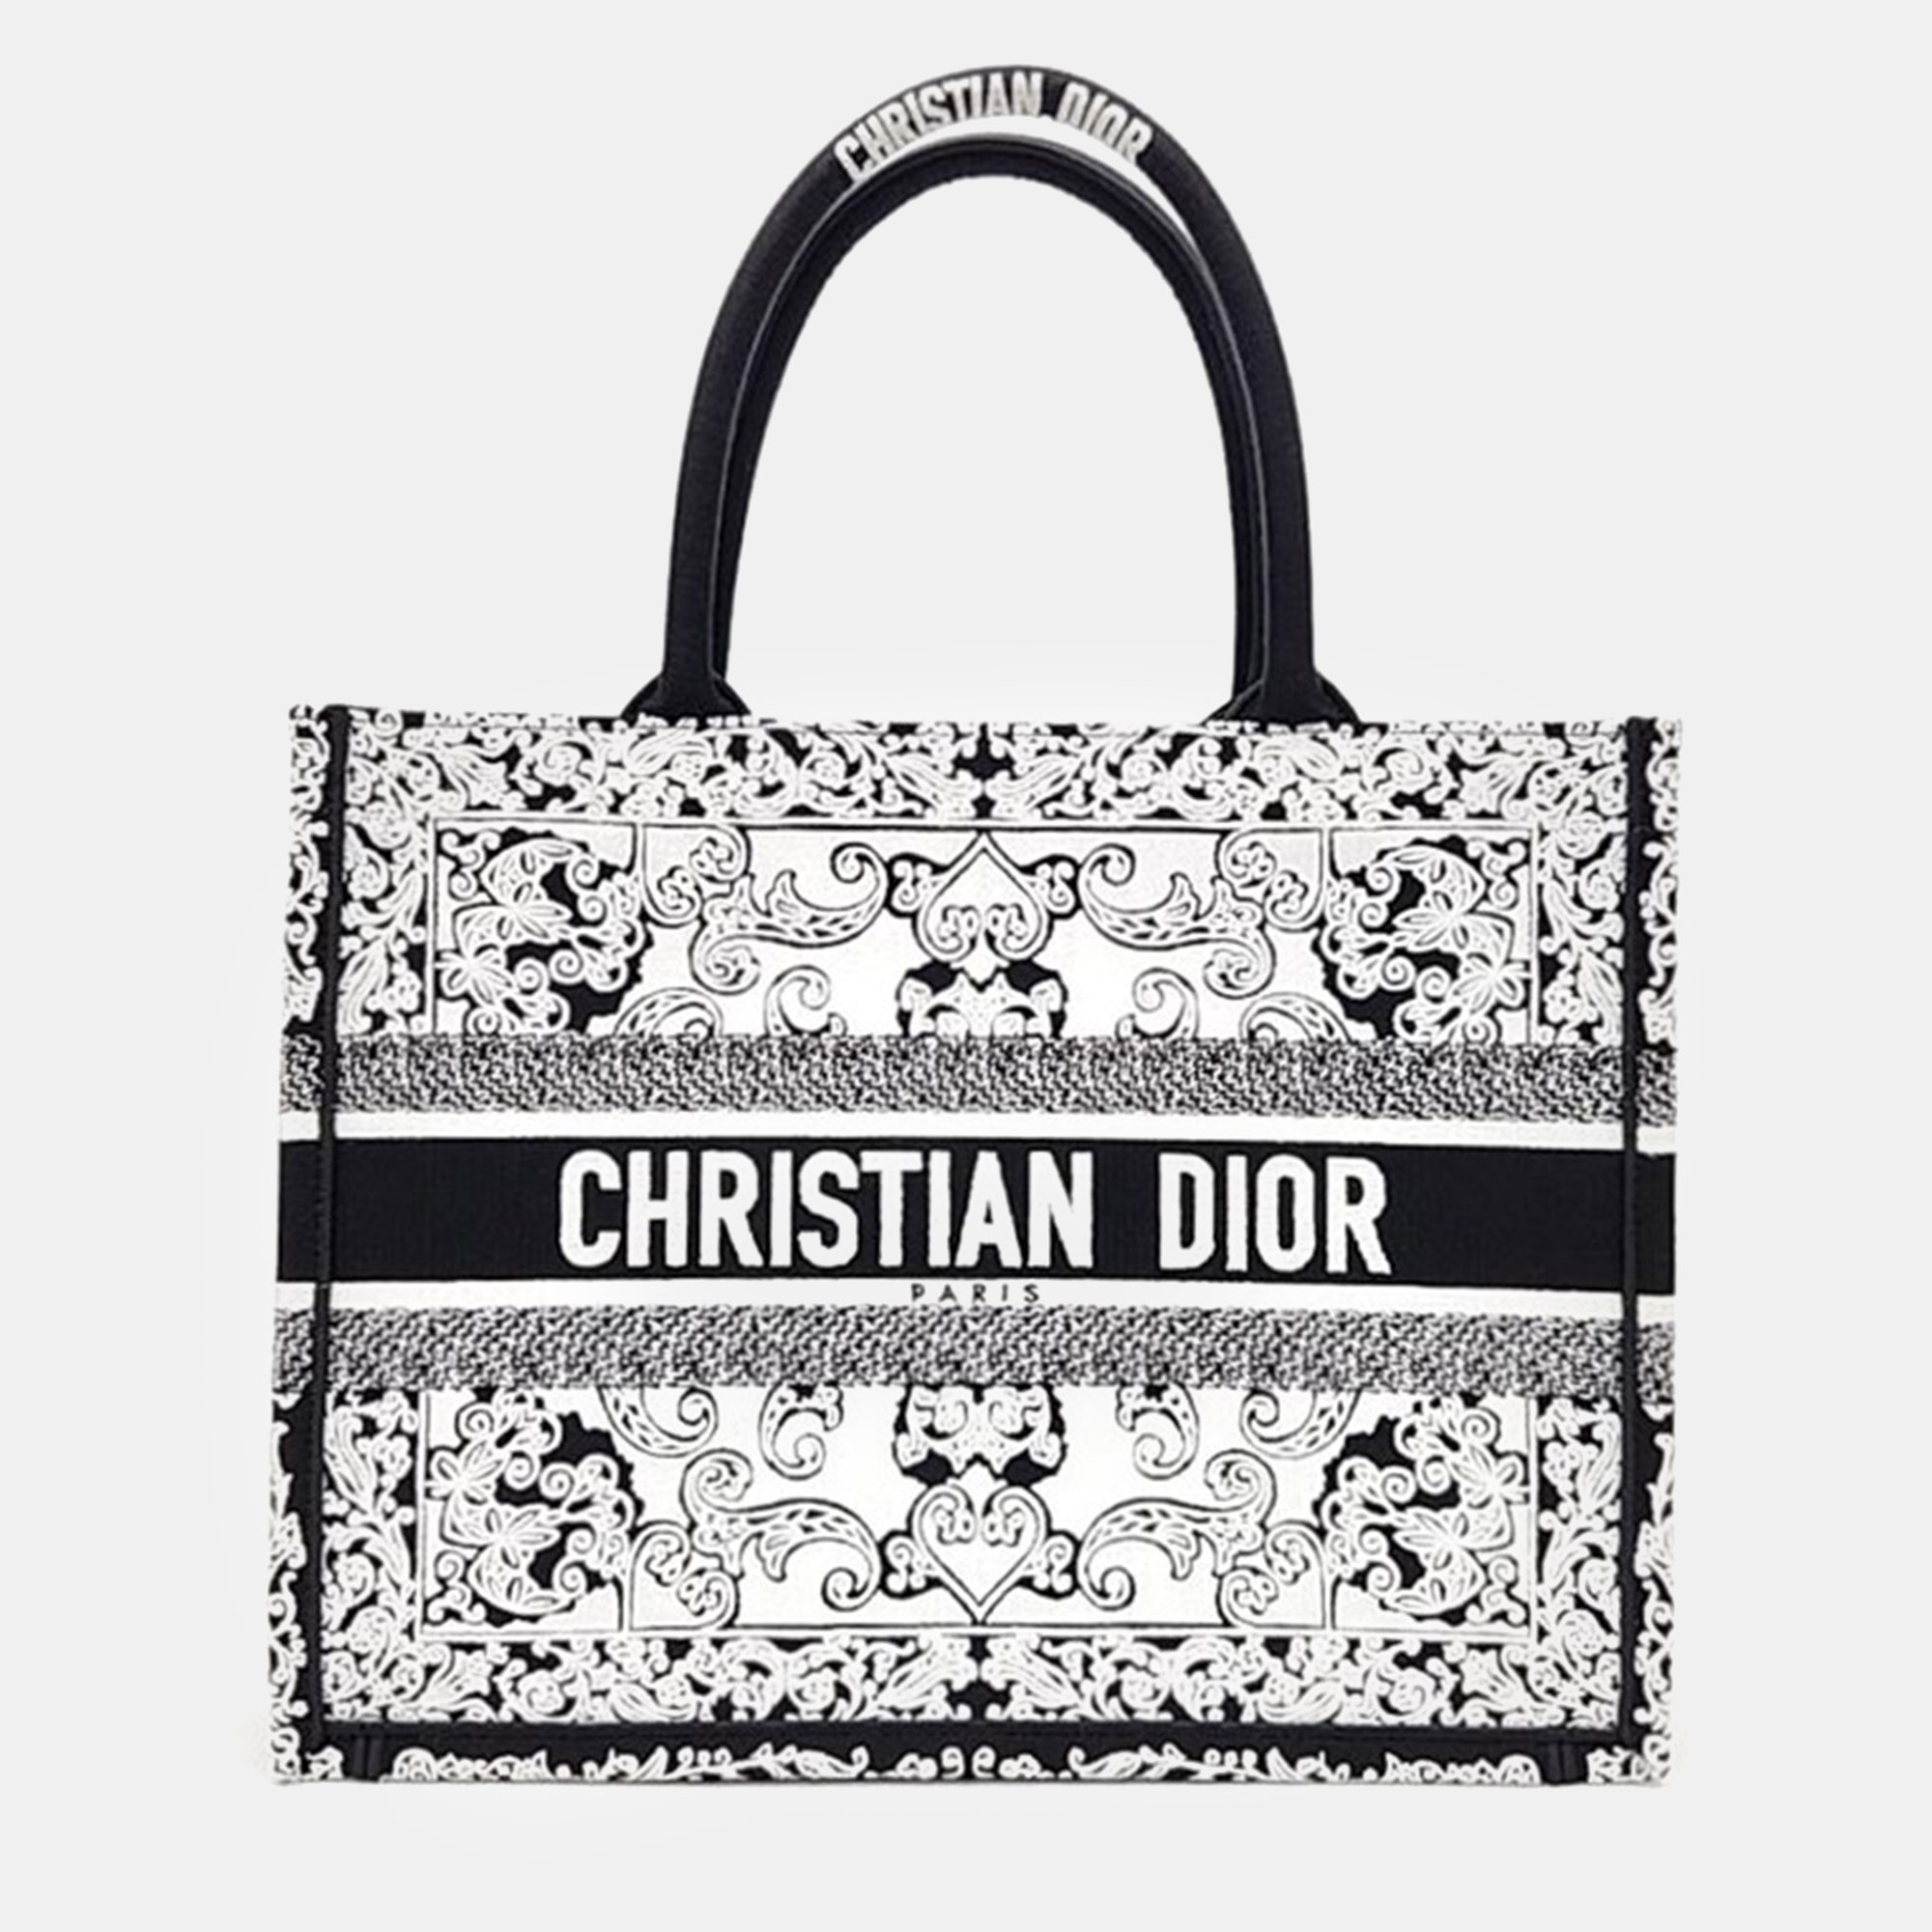 Christian dior white/black canvas book tote bag